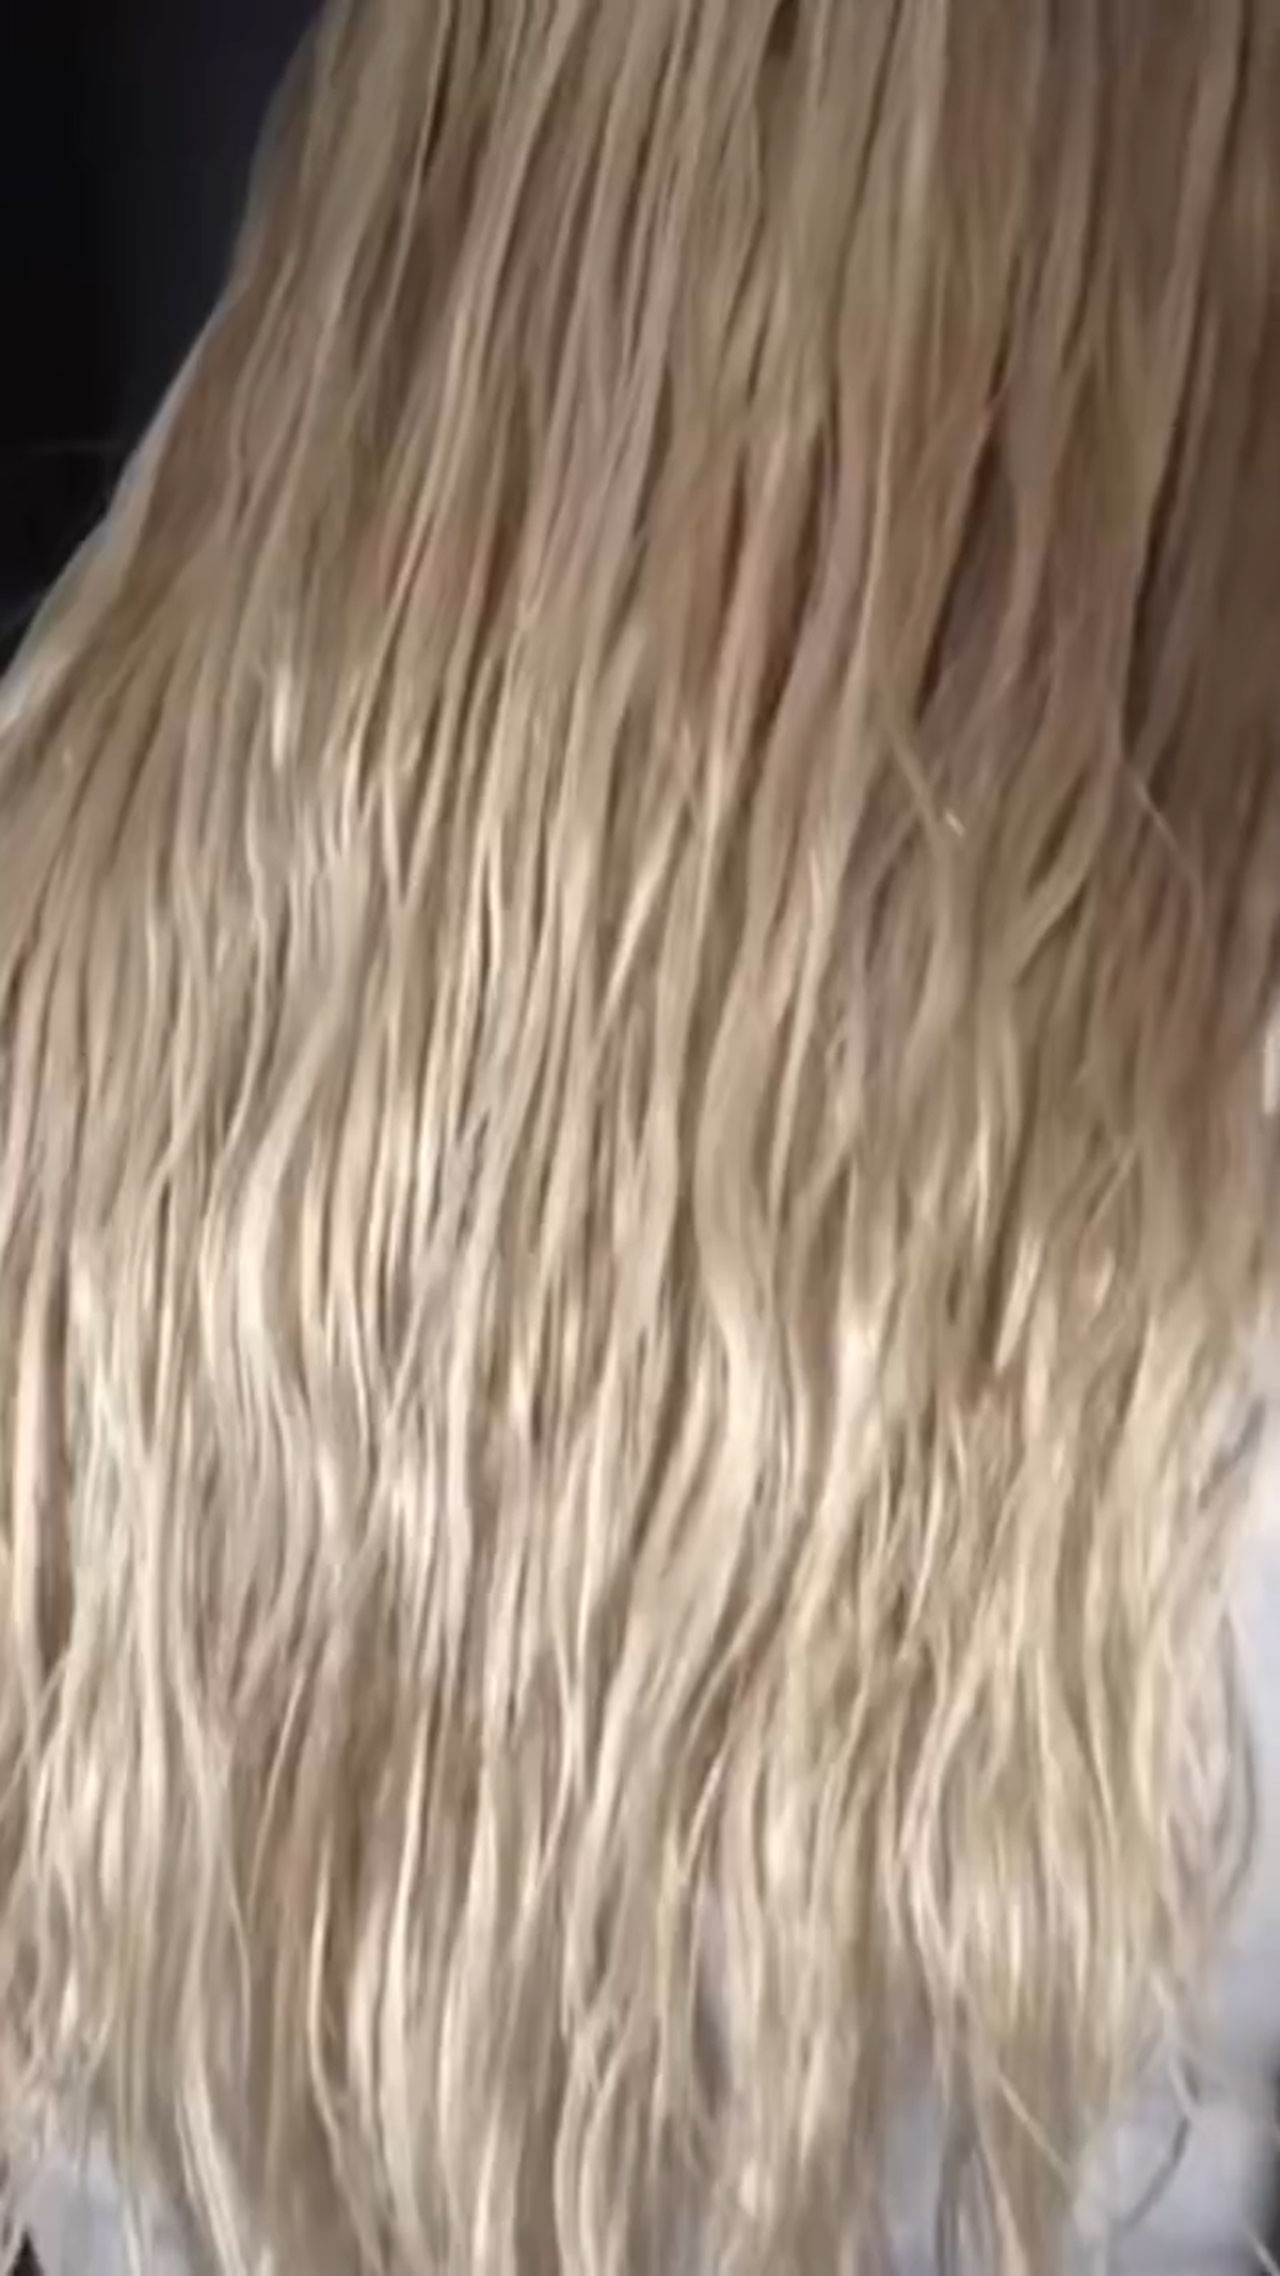 Camila Cabello on Dyeing Her Hair Platinum Blonde